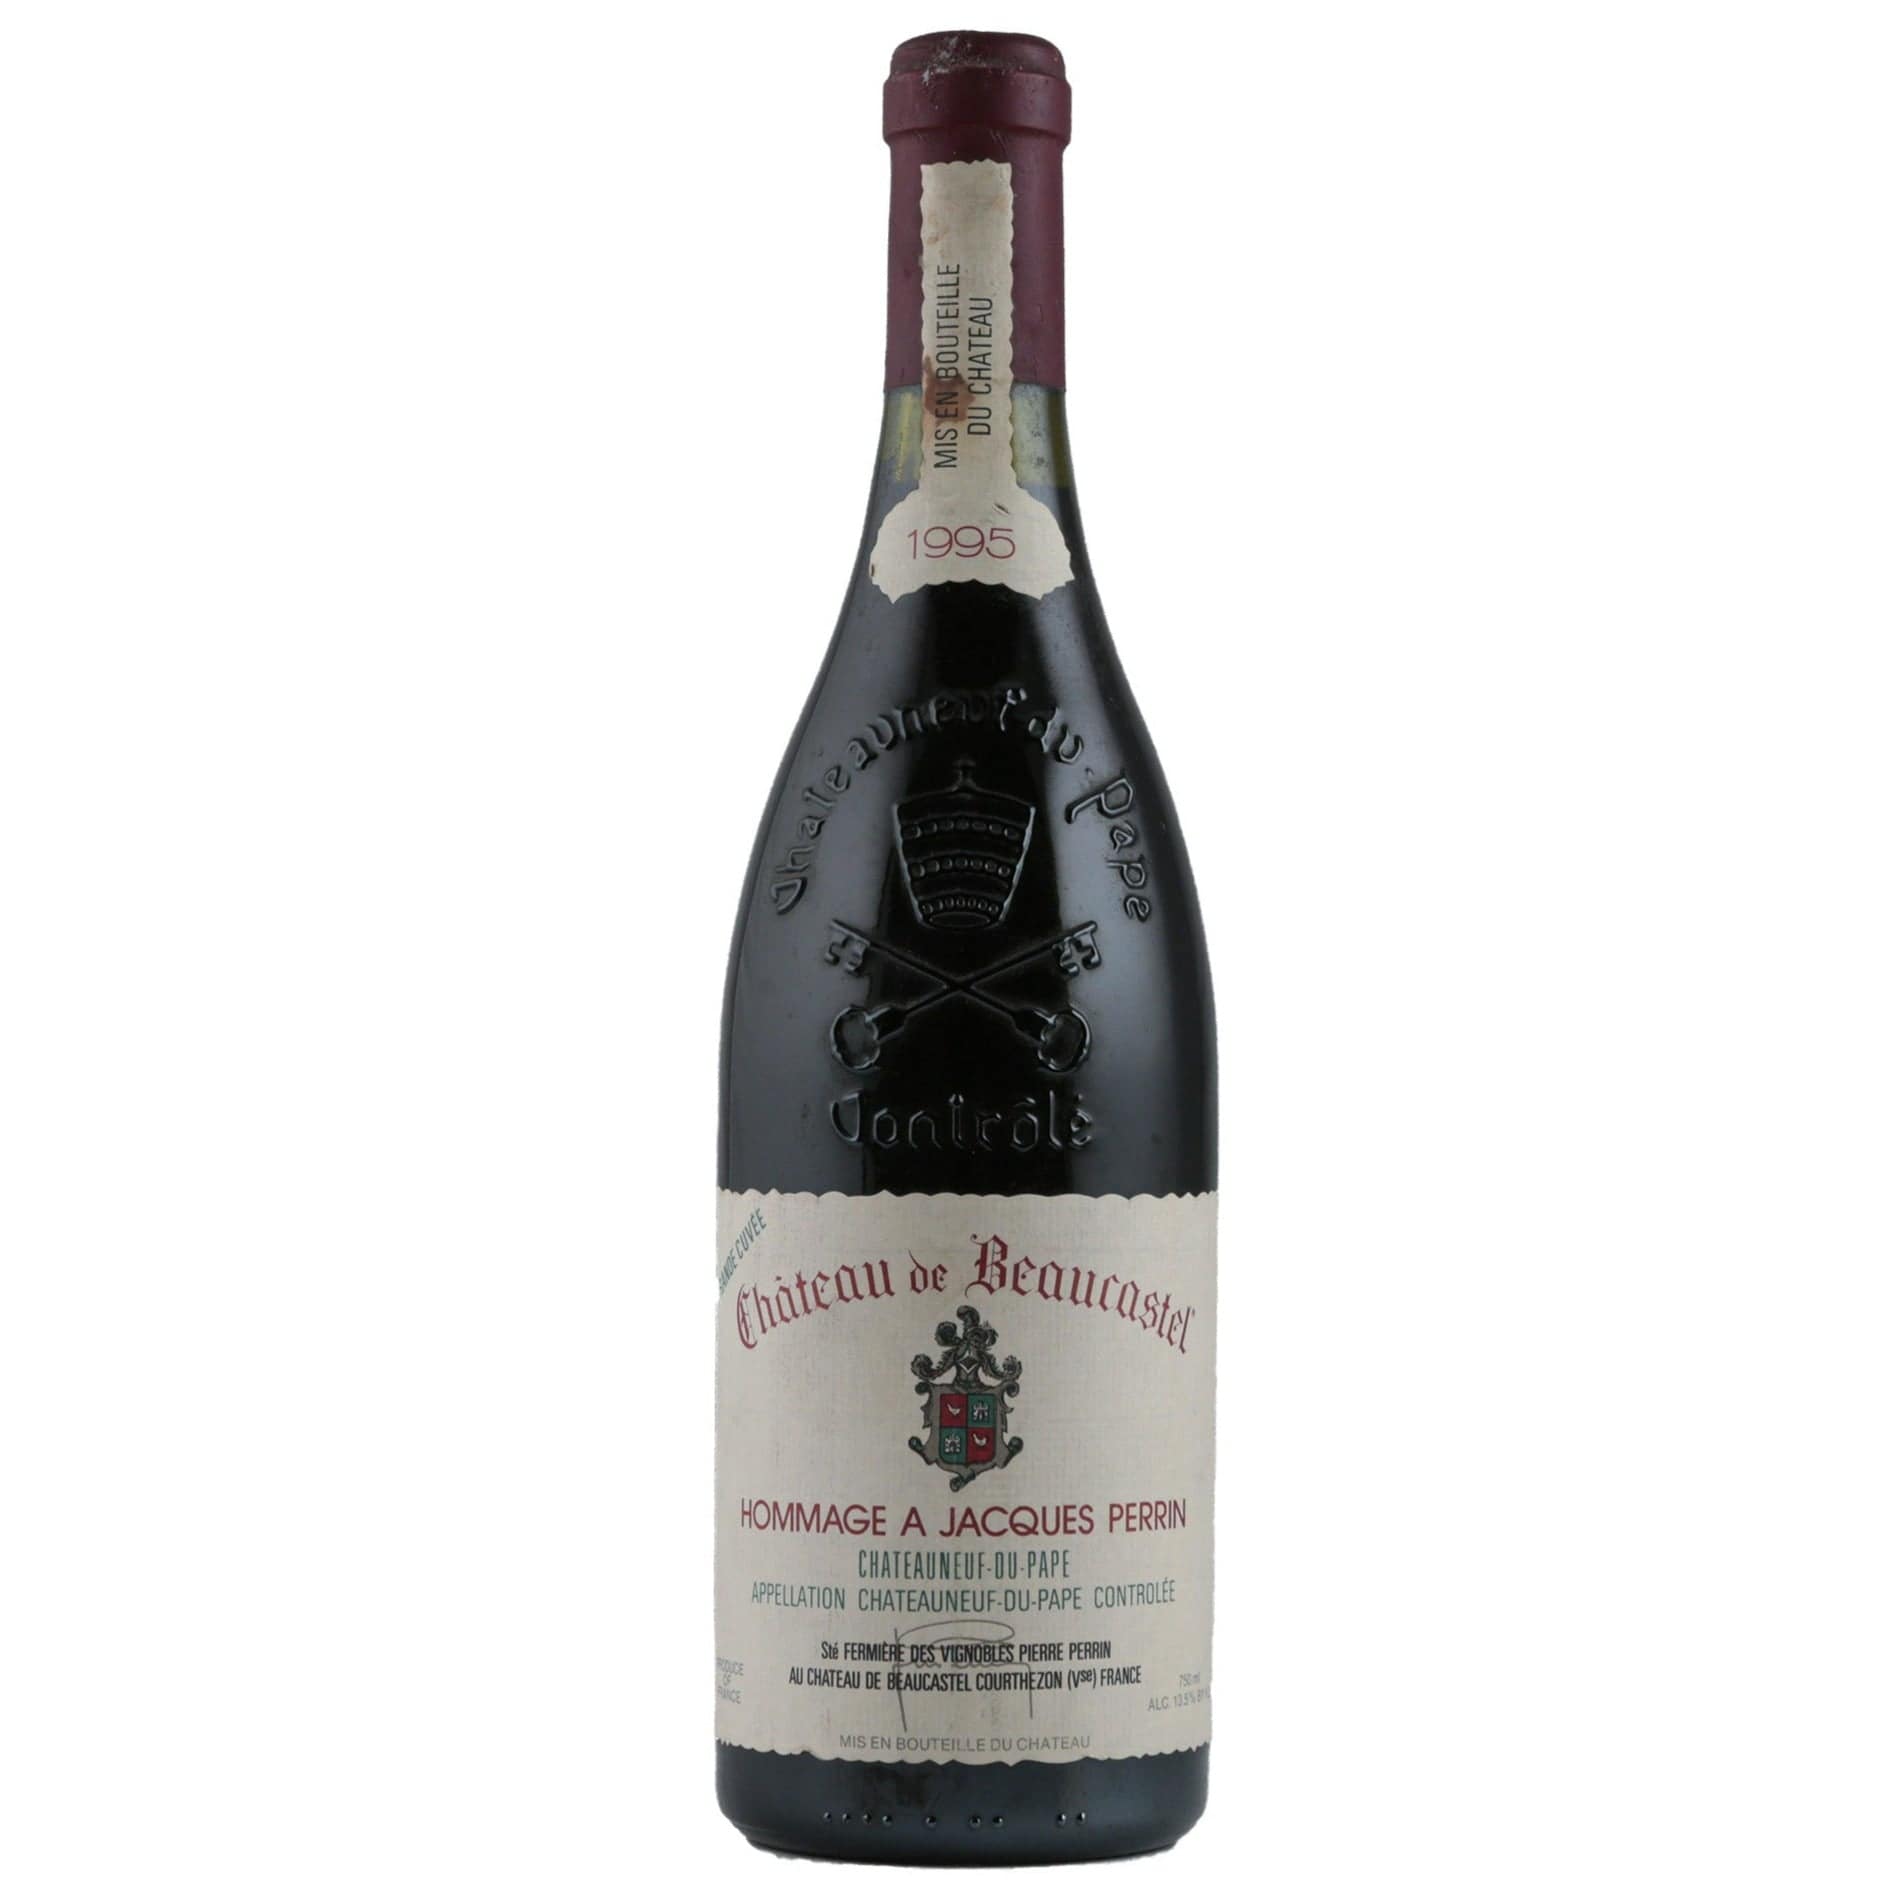 Single bottle of Red wine Chateau de Beaucastel, Hommage a Jacques Perrin, Chateauneuf du Pape, 1995 70% Mourvèdre, 15% Syrah, 10% Grenache & 5% Counoise